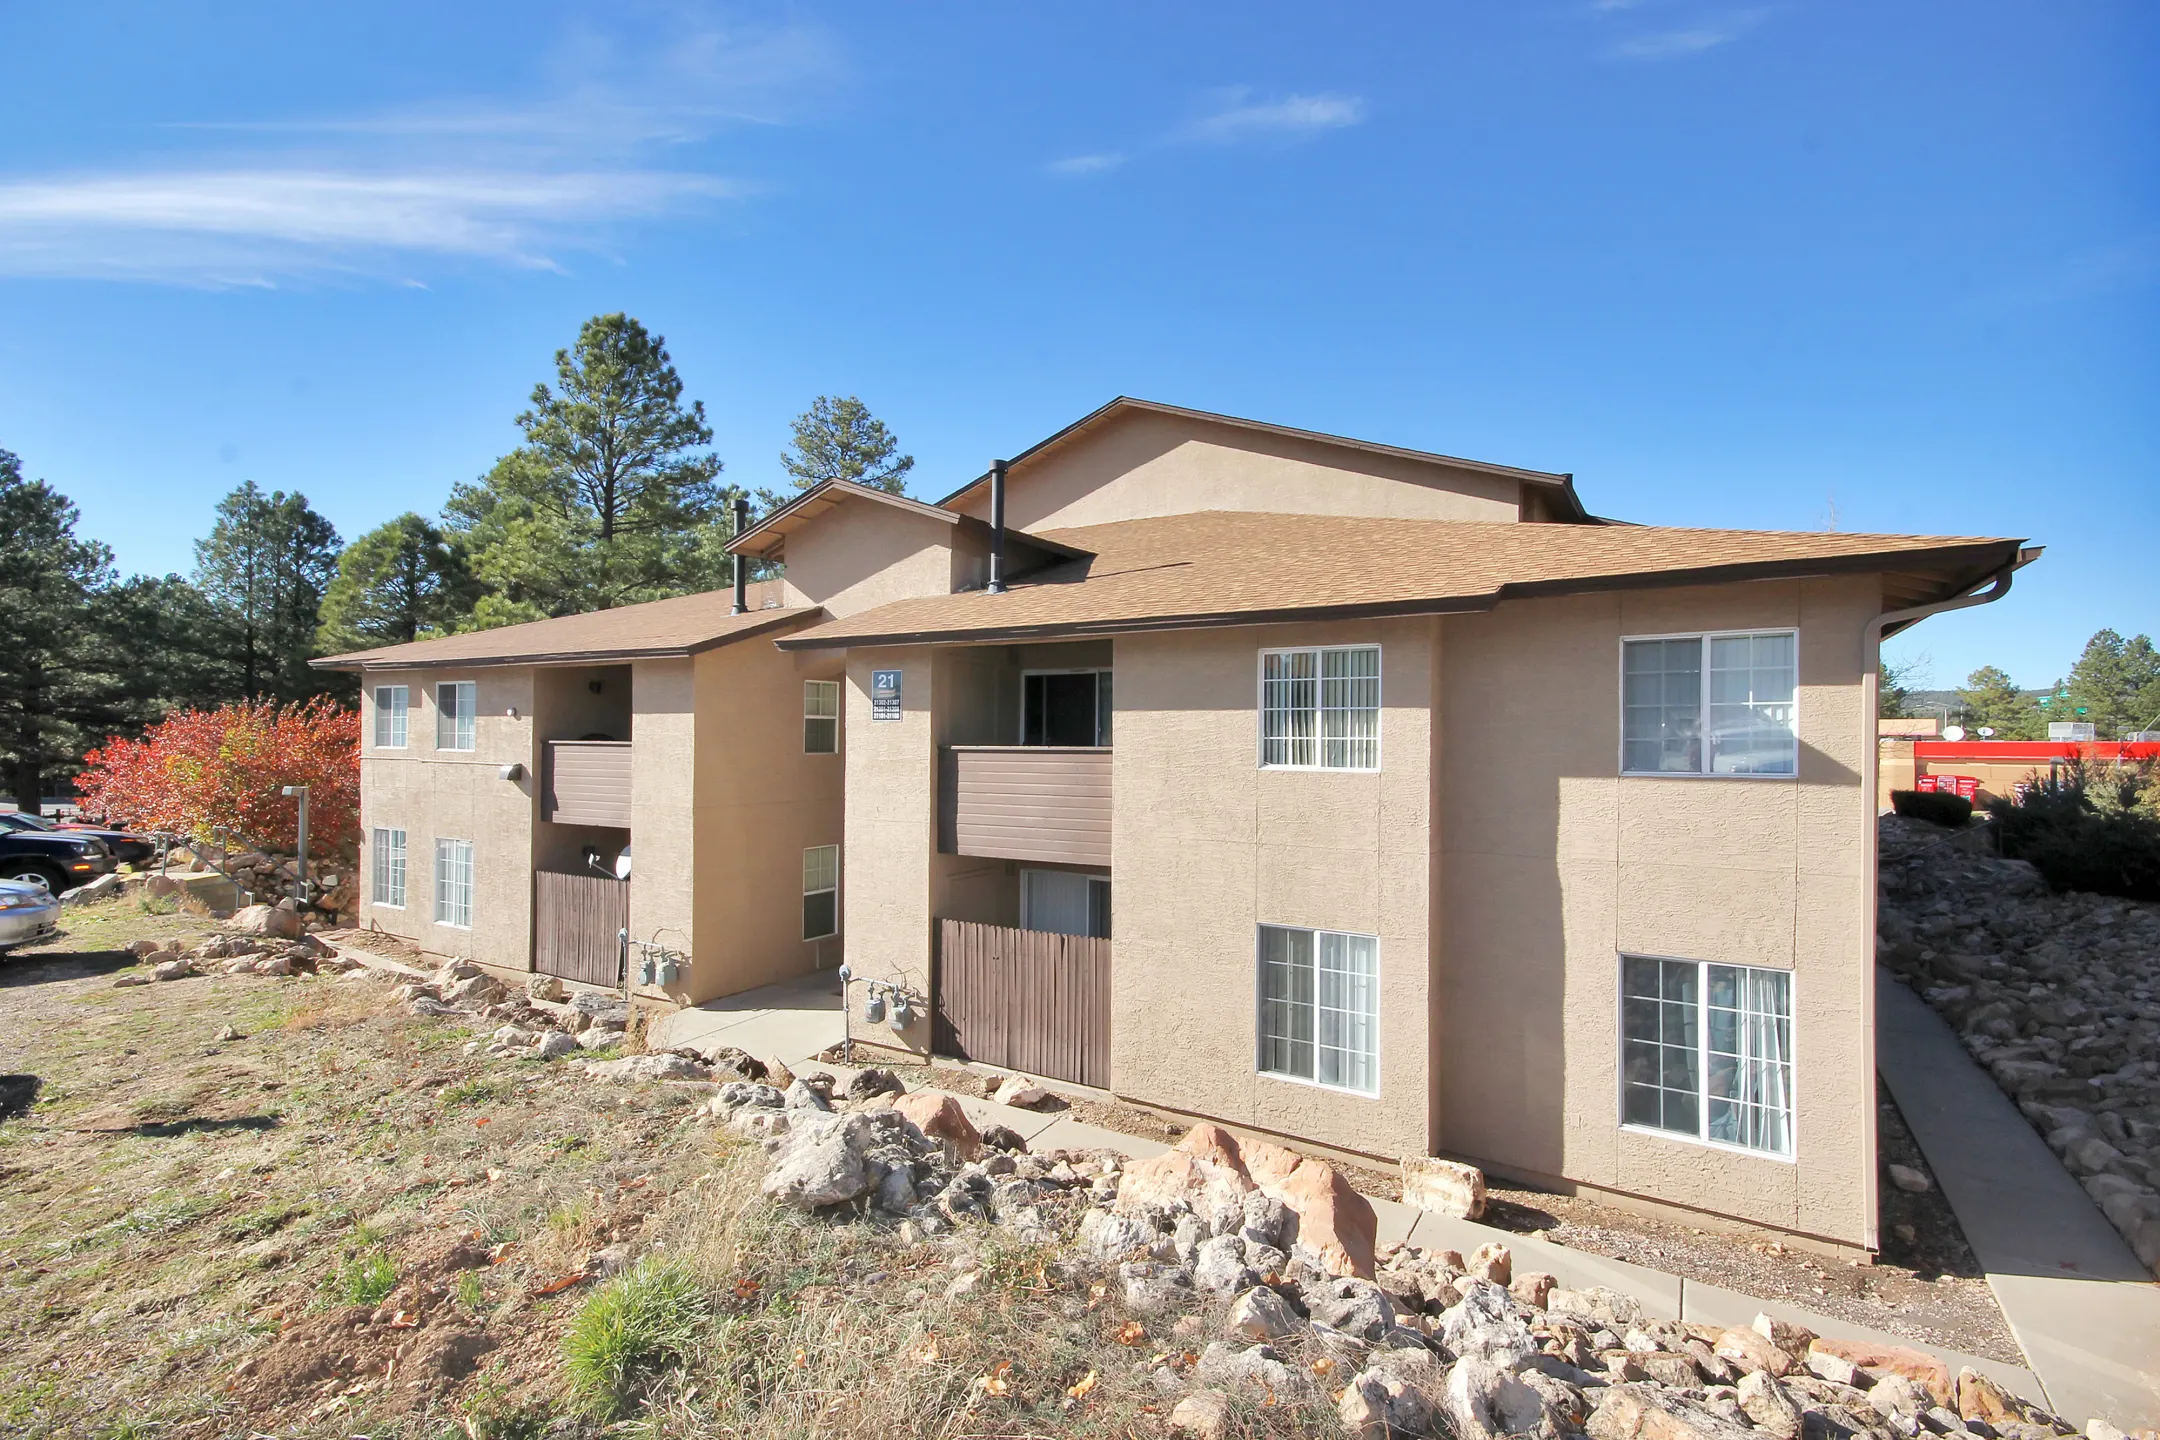 Building - Table Rock Apartments - Flagstaff, AZ